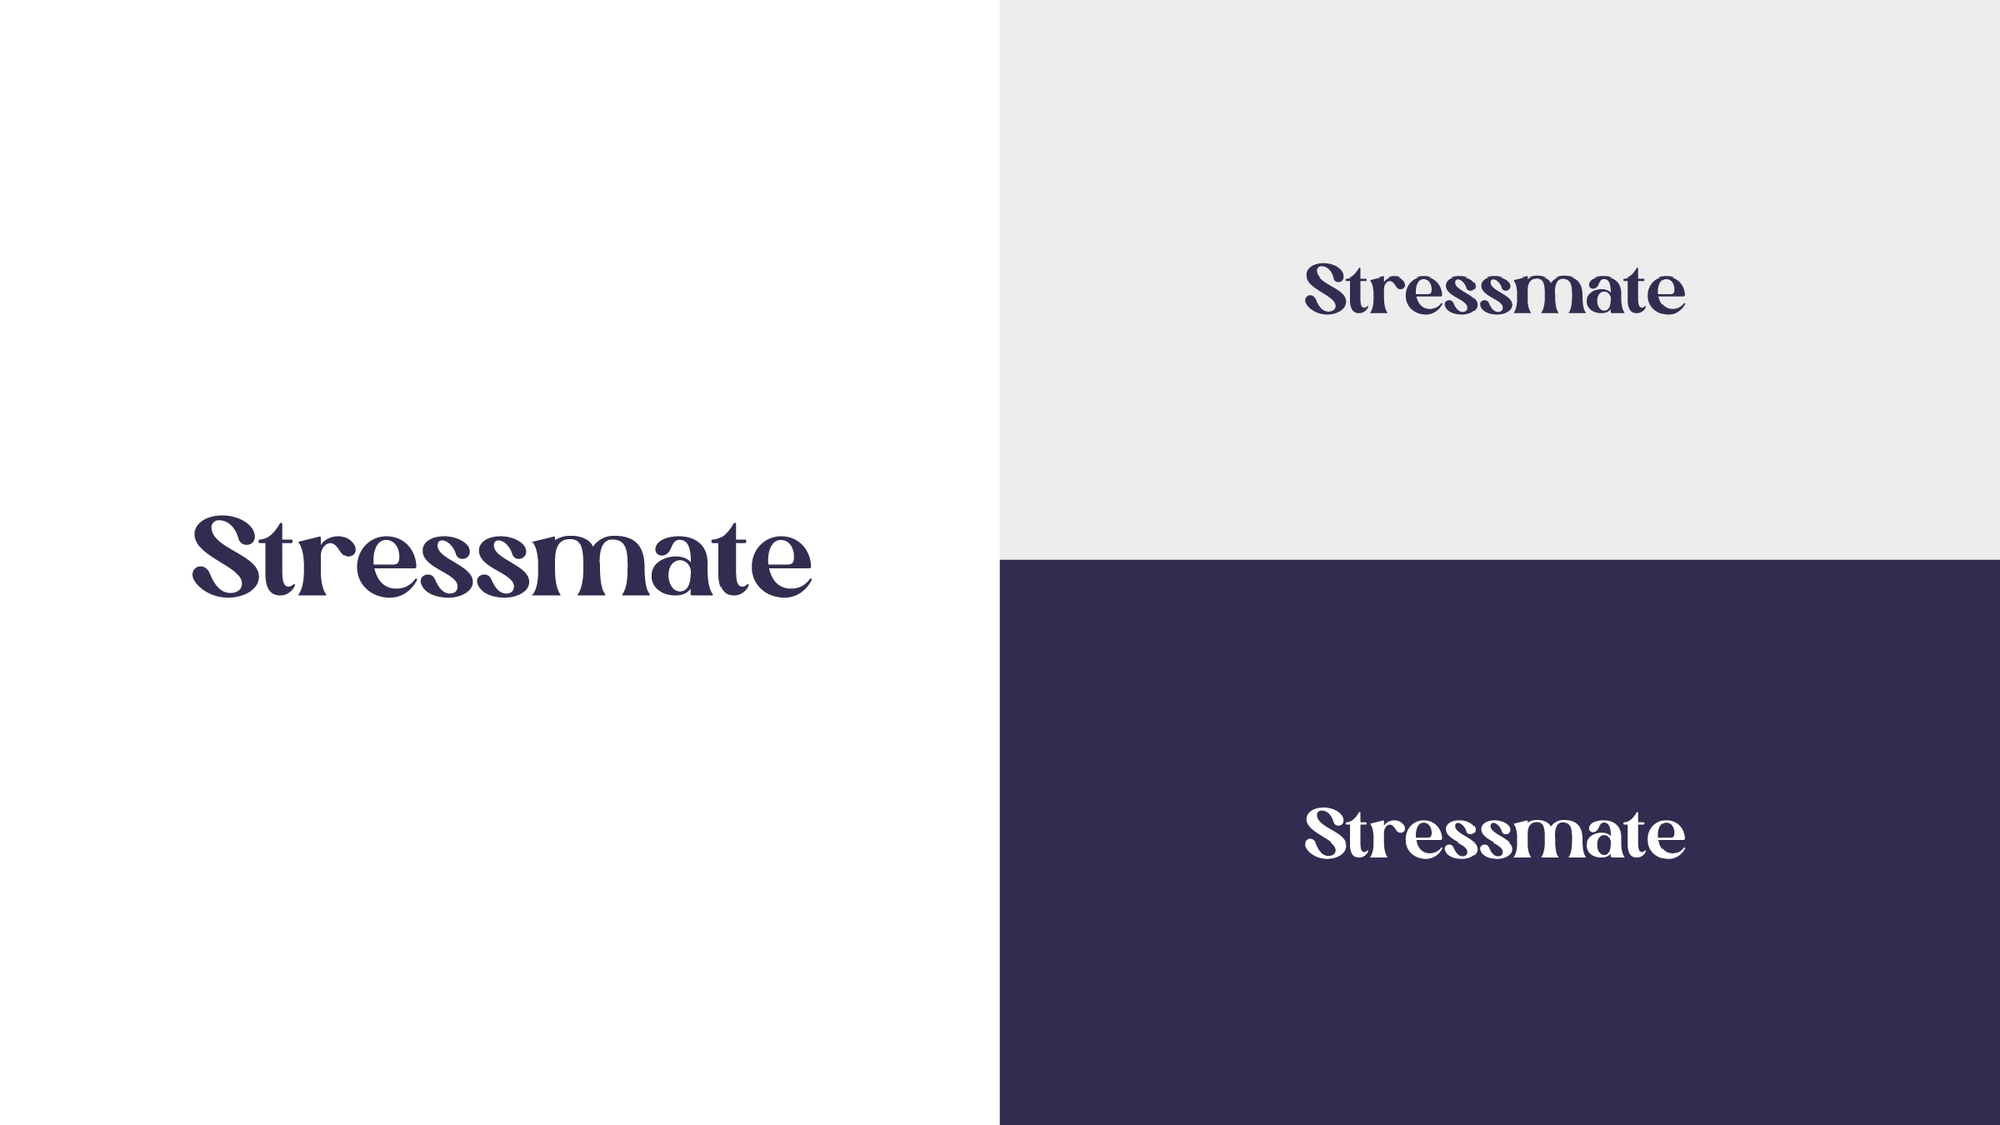 Stressmate logo 3 up